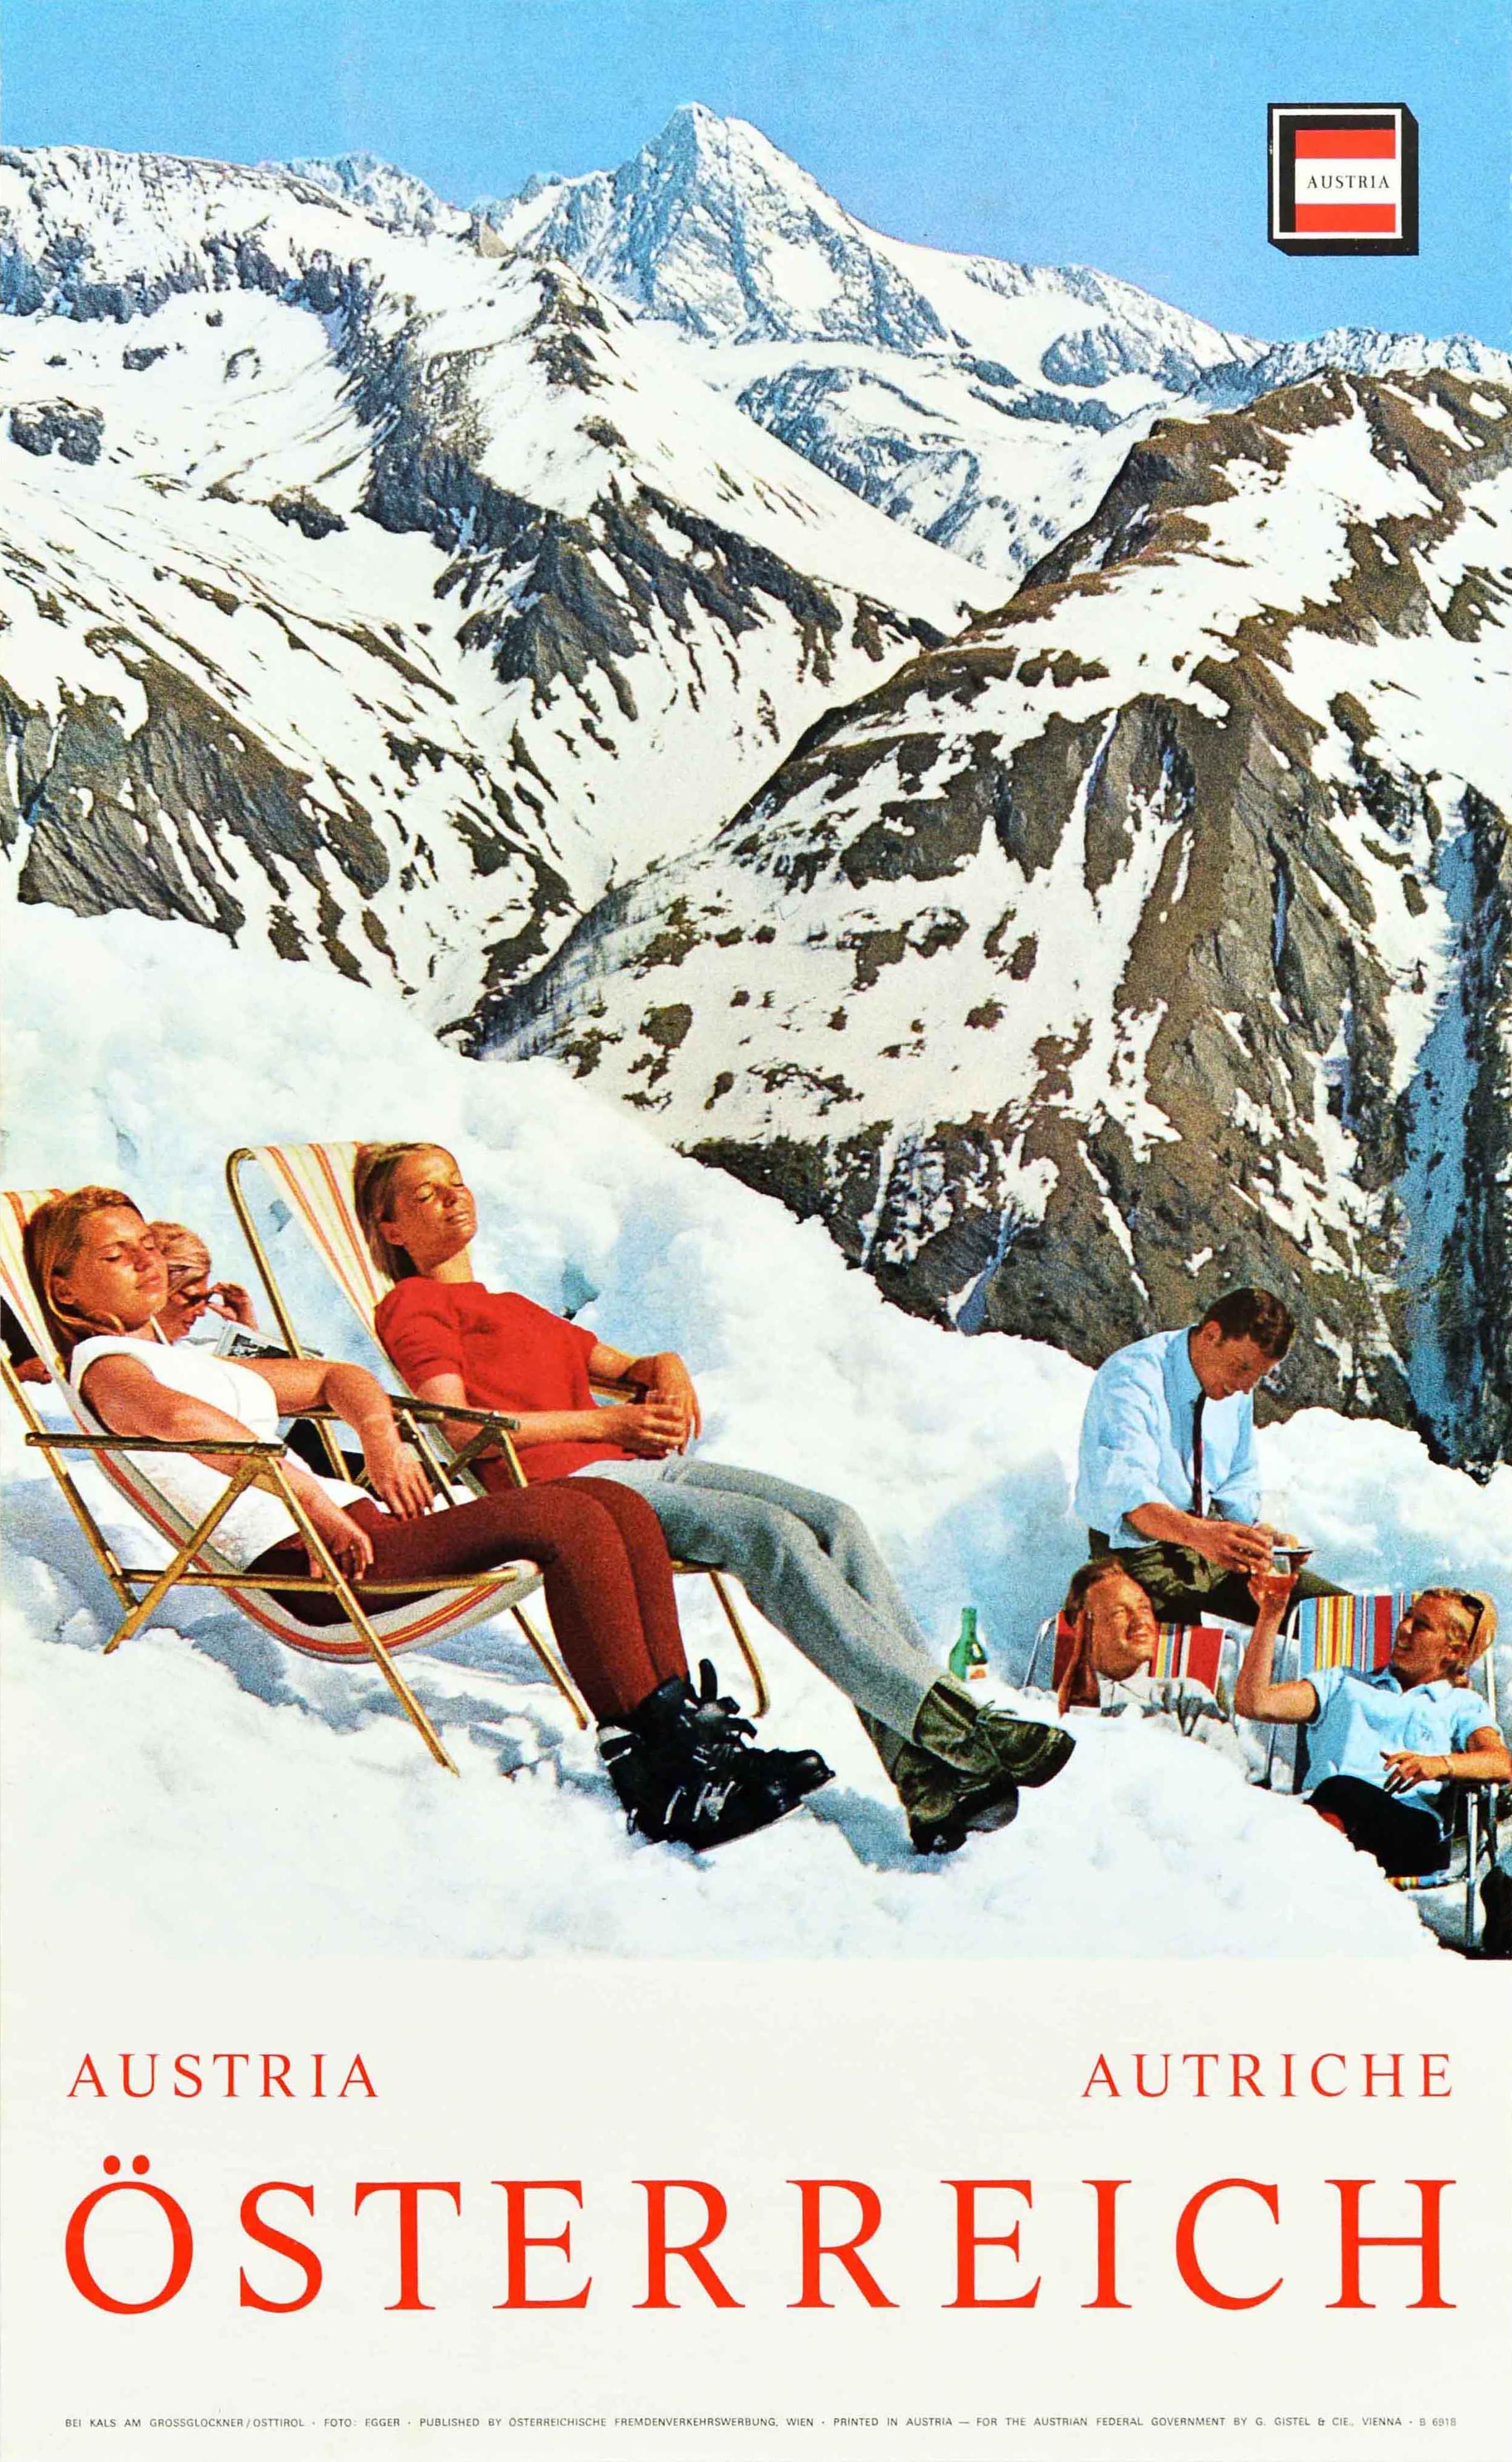 Egger Print - Original Vintage Winter Travel Poster Osterreich Austria Skiing Sunbathing Photo